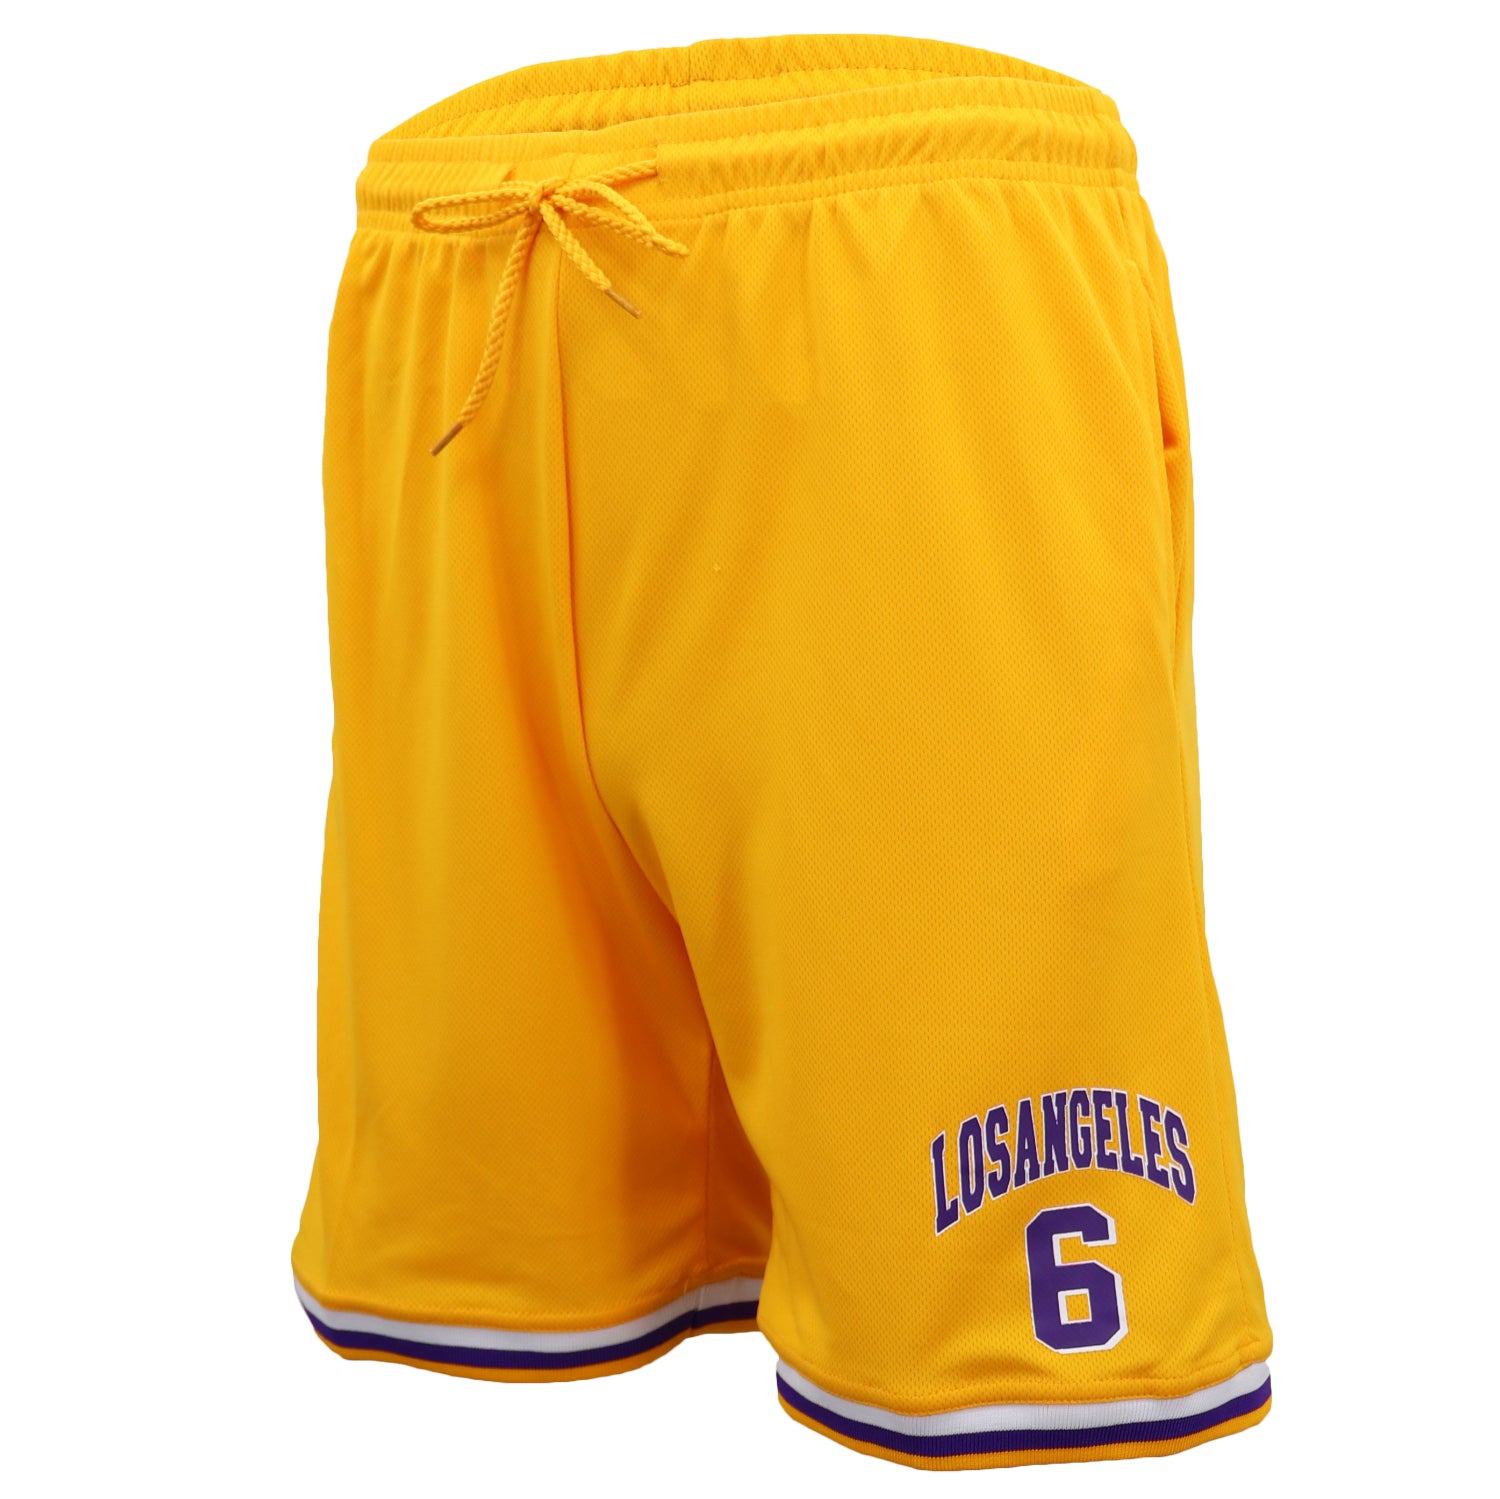 Men's Basketball Sports Shorts Gym Jogging Swim Board Boxing Sweat Casual Pants, Yellow - Los Angeles 6, 2XL